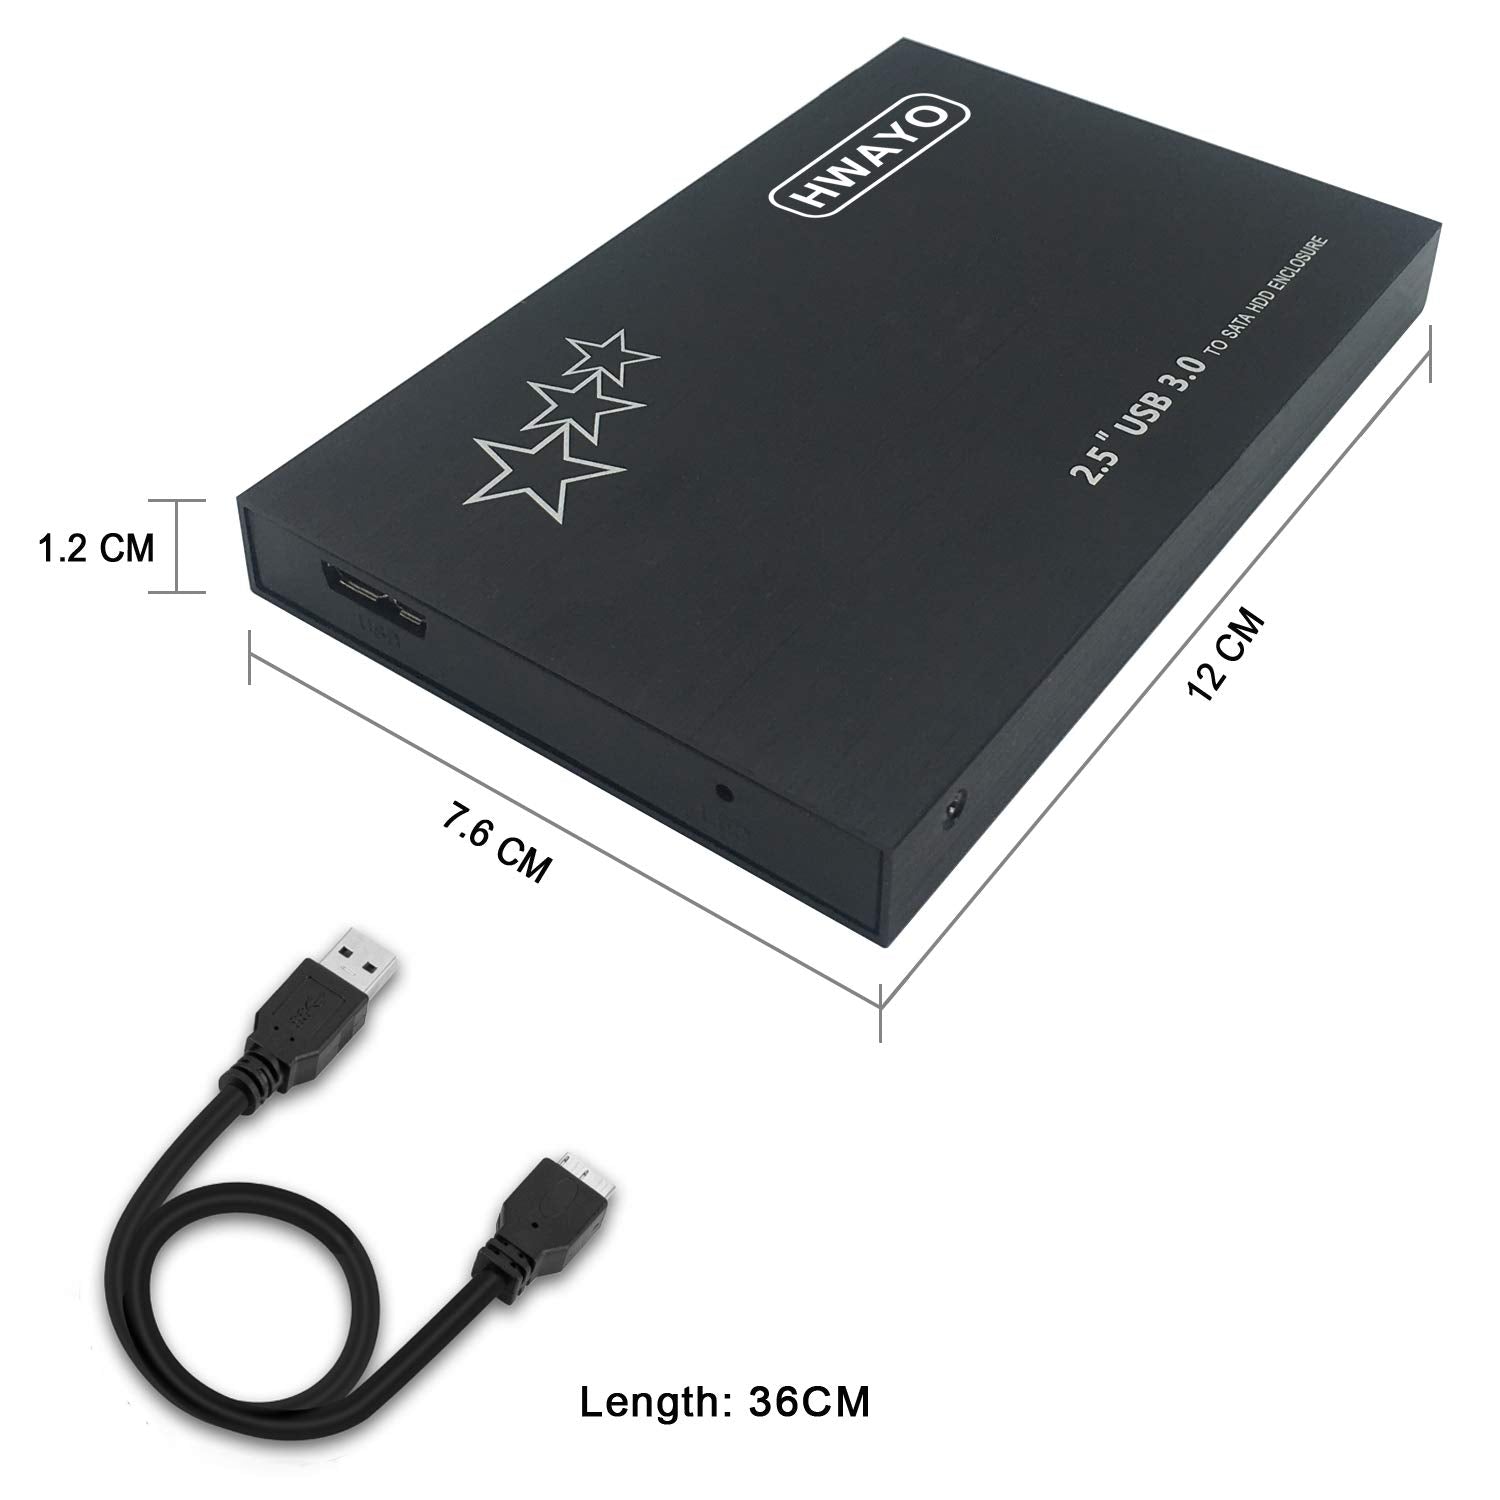 160GB External Hard Drive Portable - HWAYO 2.5'' Ultra Slim HDD Storage USB 3.0 for PC, Laptop, Mac, Chromebook (Black)